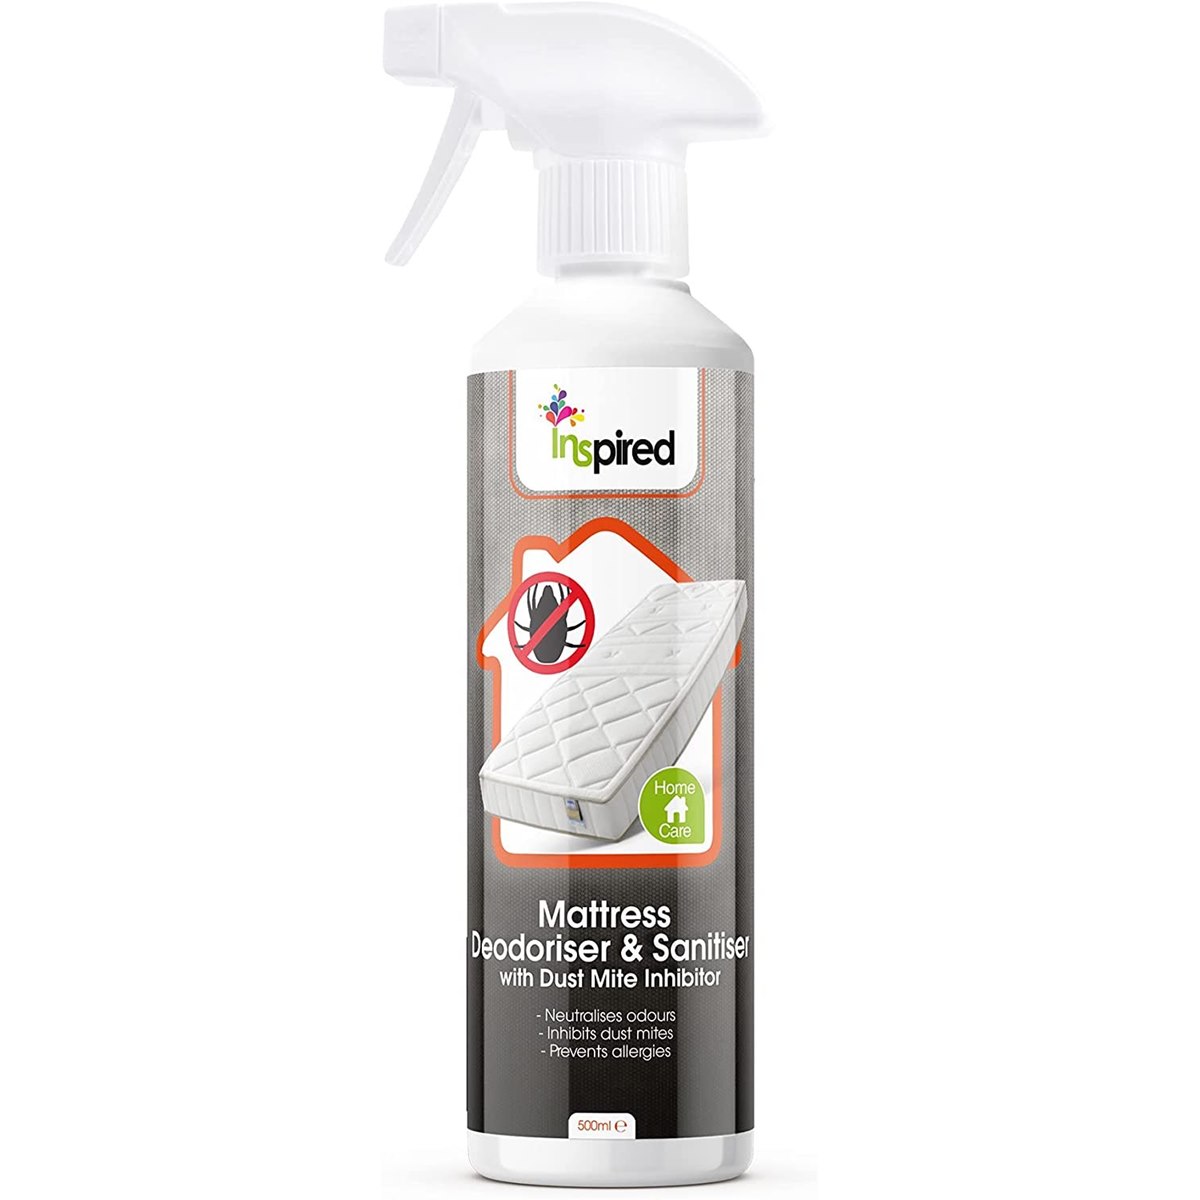 Inspired Mattress Deodoriser and Cleaner Spray 500ml with Dust Mite Inhibitor